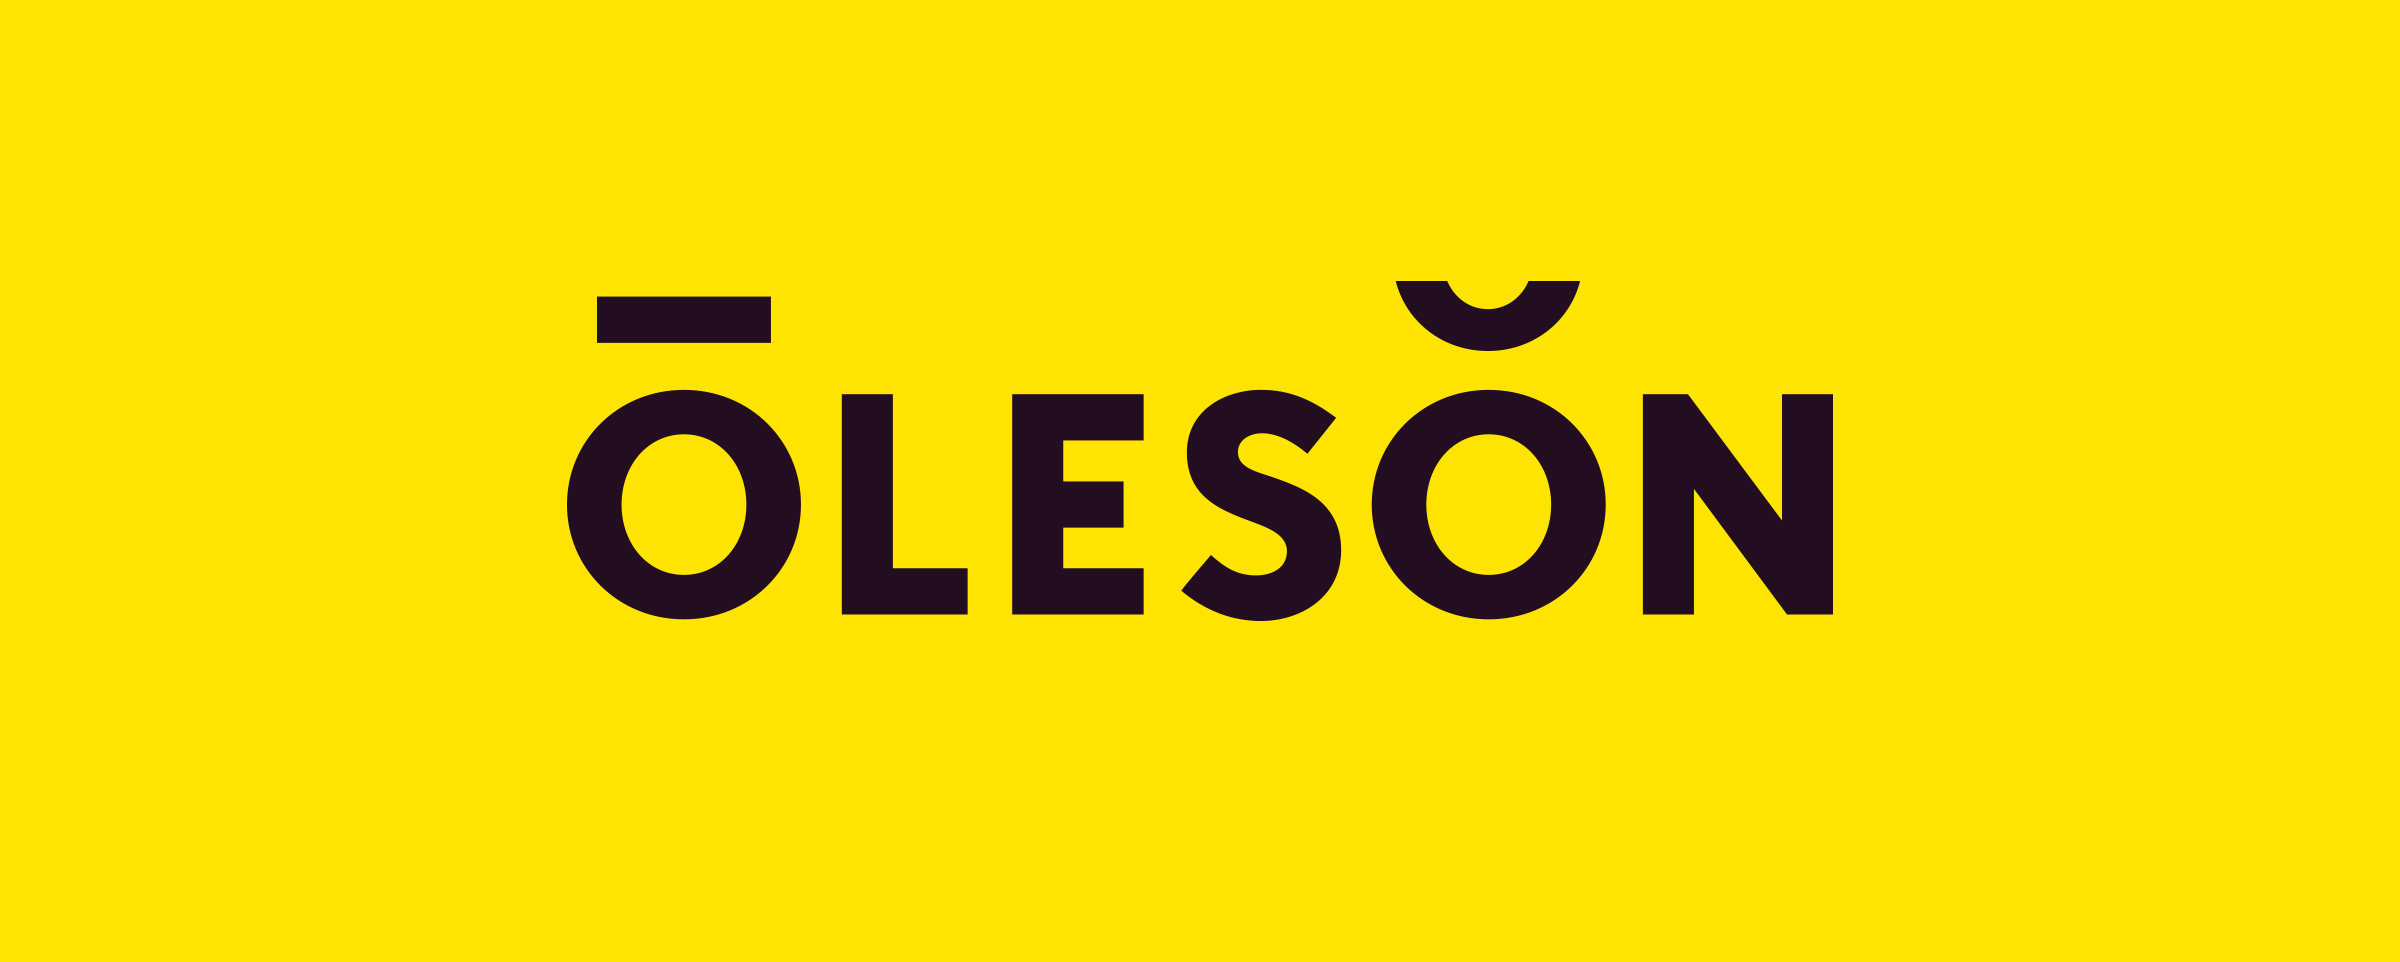 oleson_logo